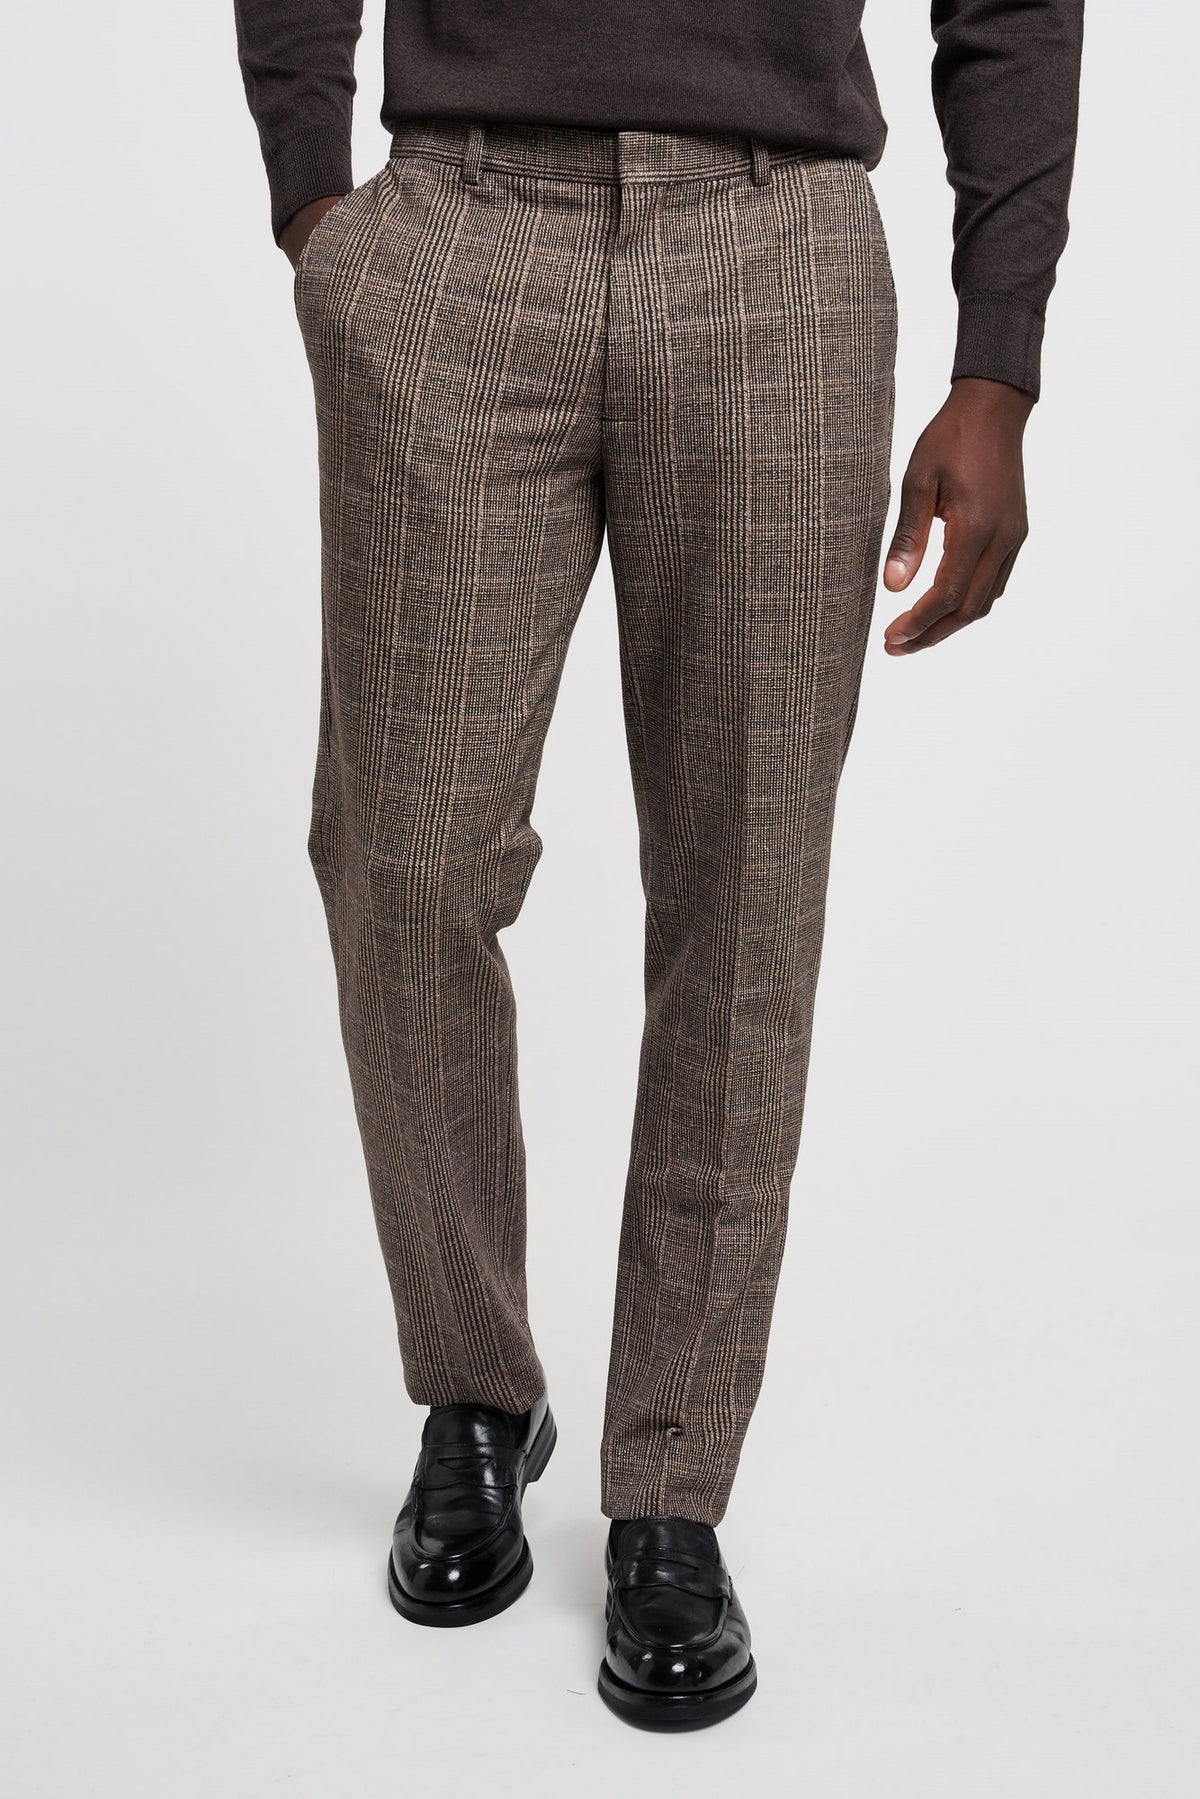 Circolo 1901 Smoked Check Brown Cotton Pants